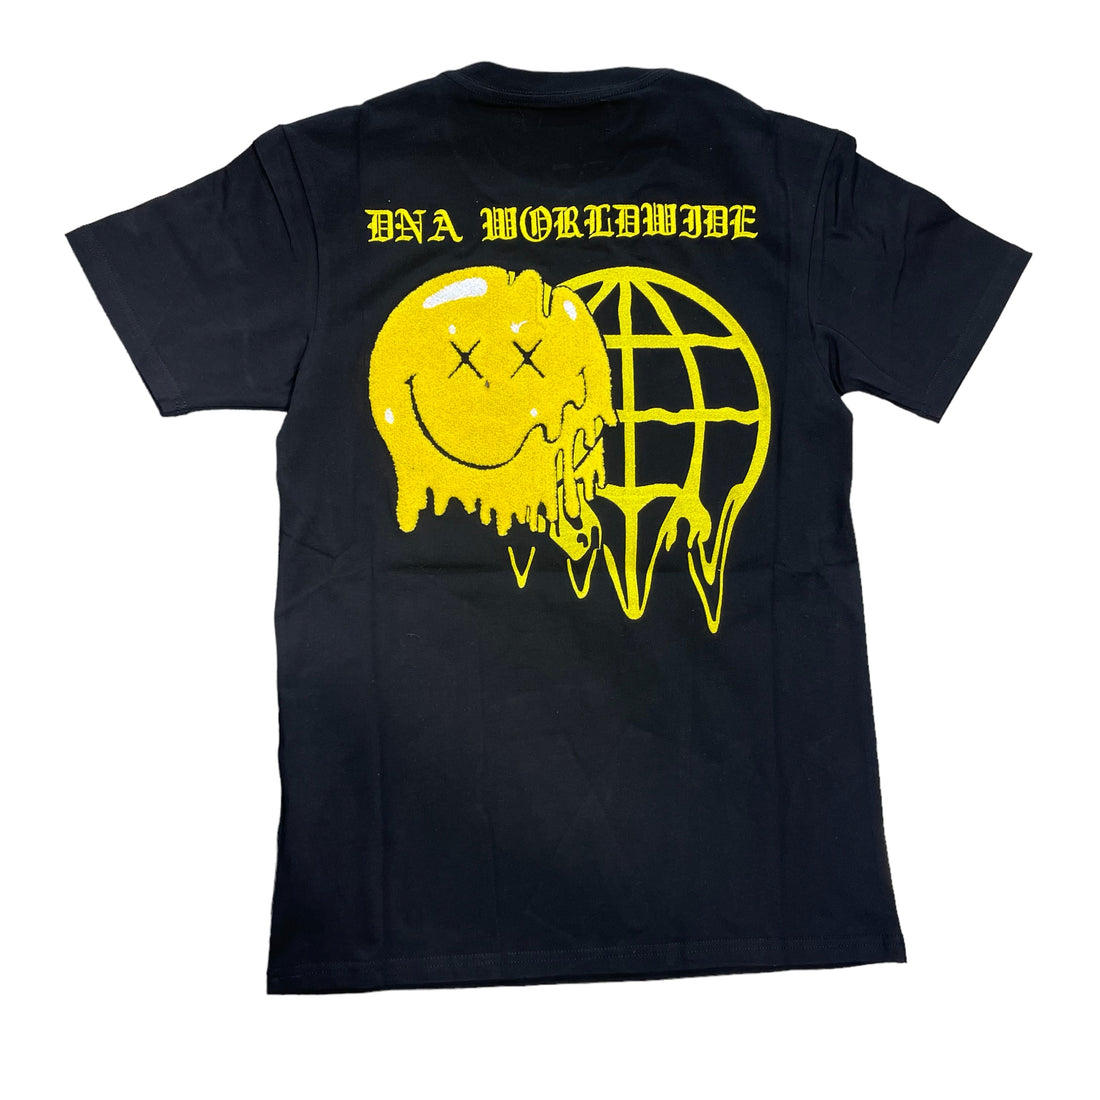 DNA Worldwide Embroidered Black/Yellow Tee